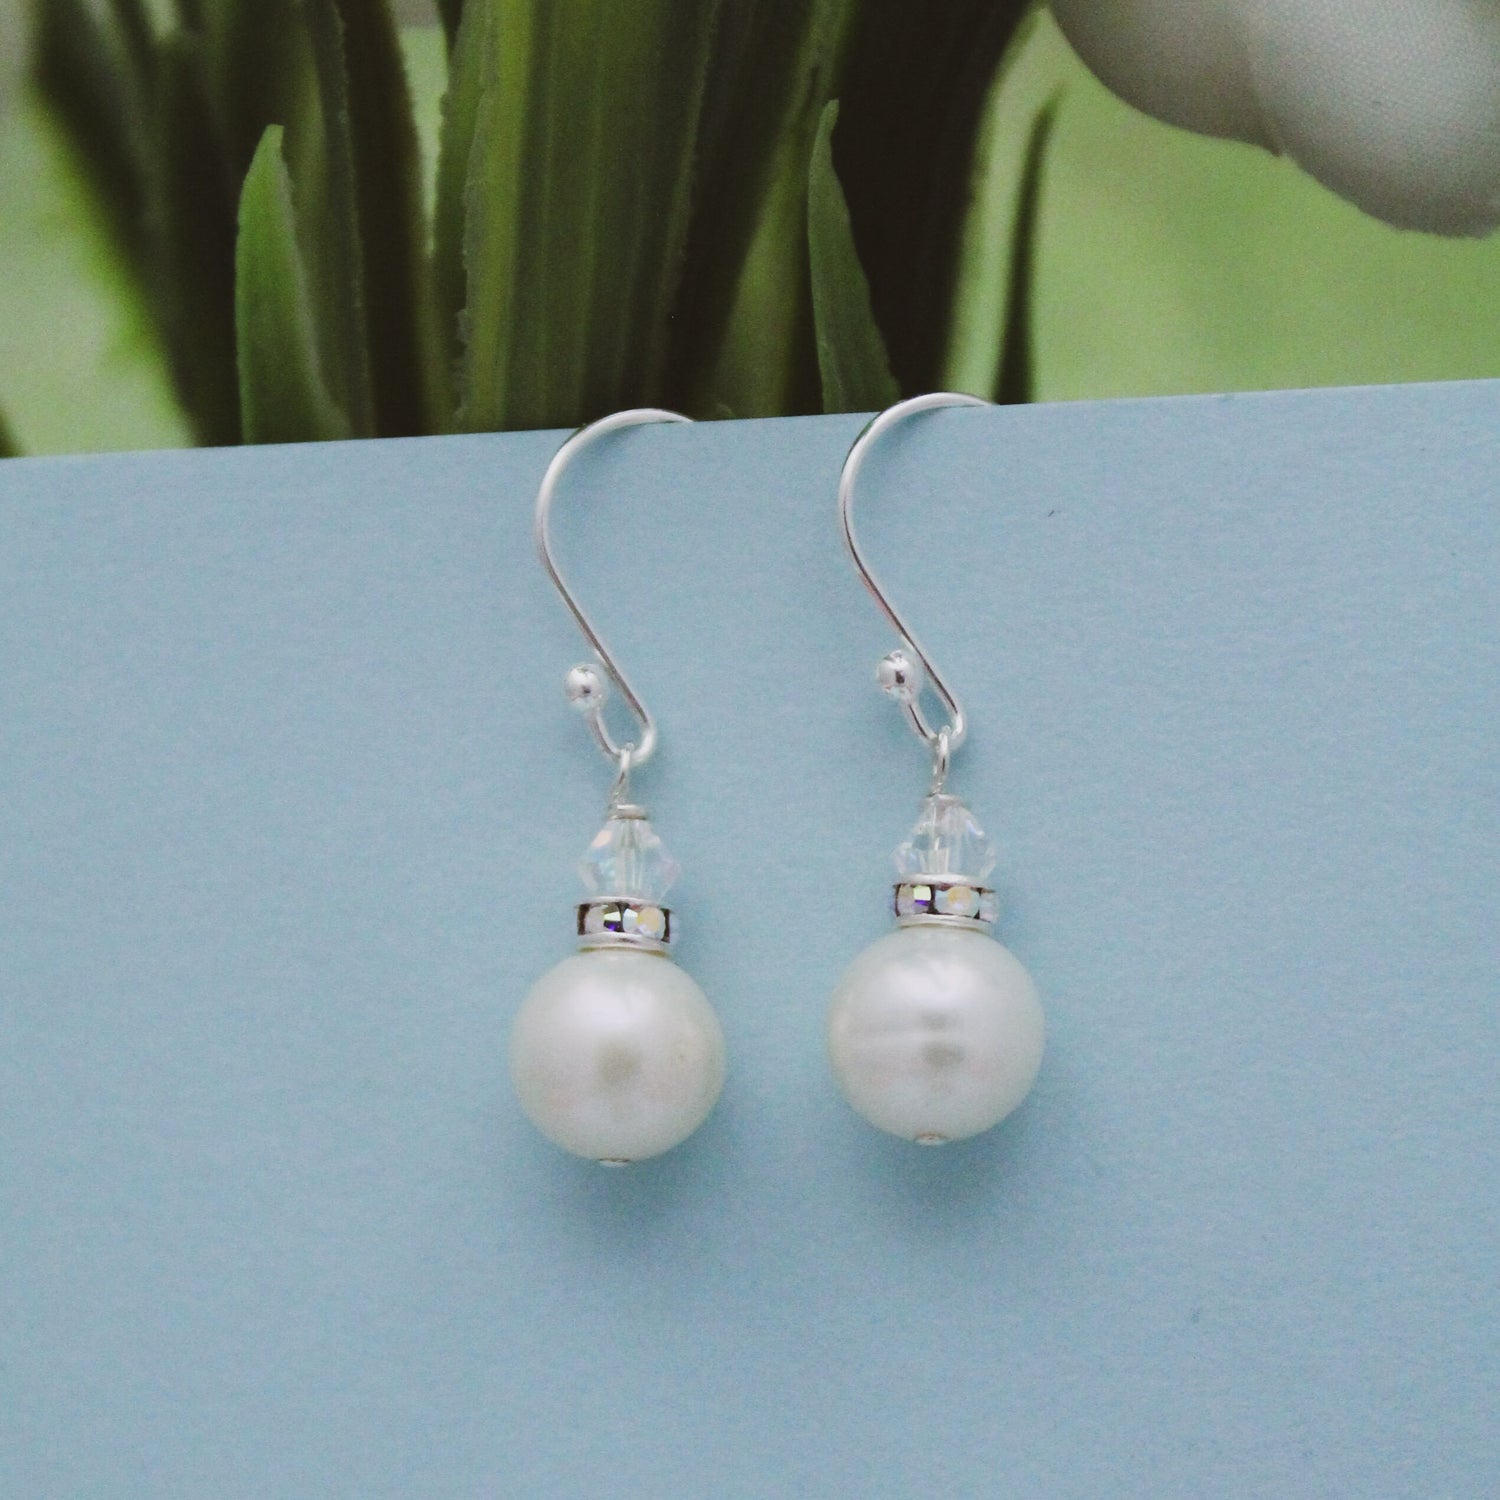 Classic Pearl Drop Earrings, Freshwater Pearl Earrings, White Pearl Earrings, Silver and Pearl Earrings, Bridesmaid Earrings, Minimalist